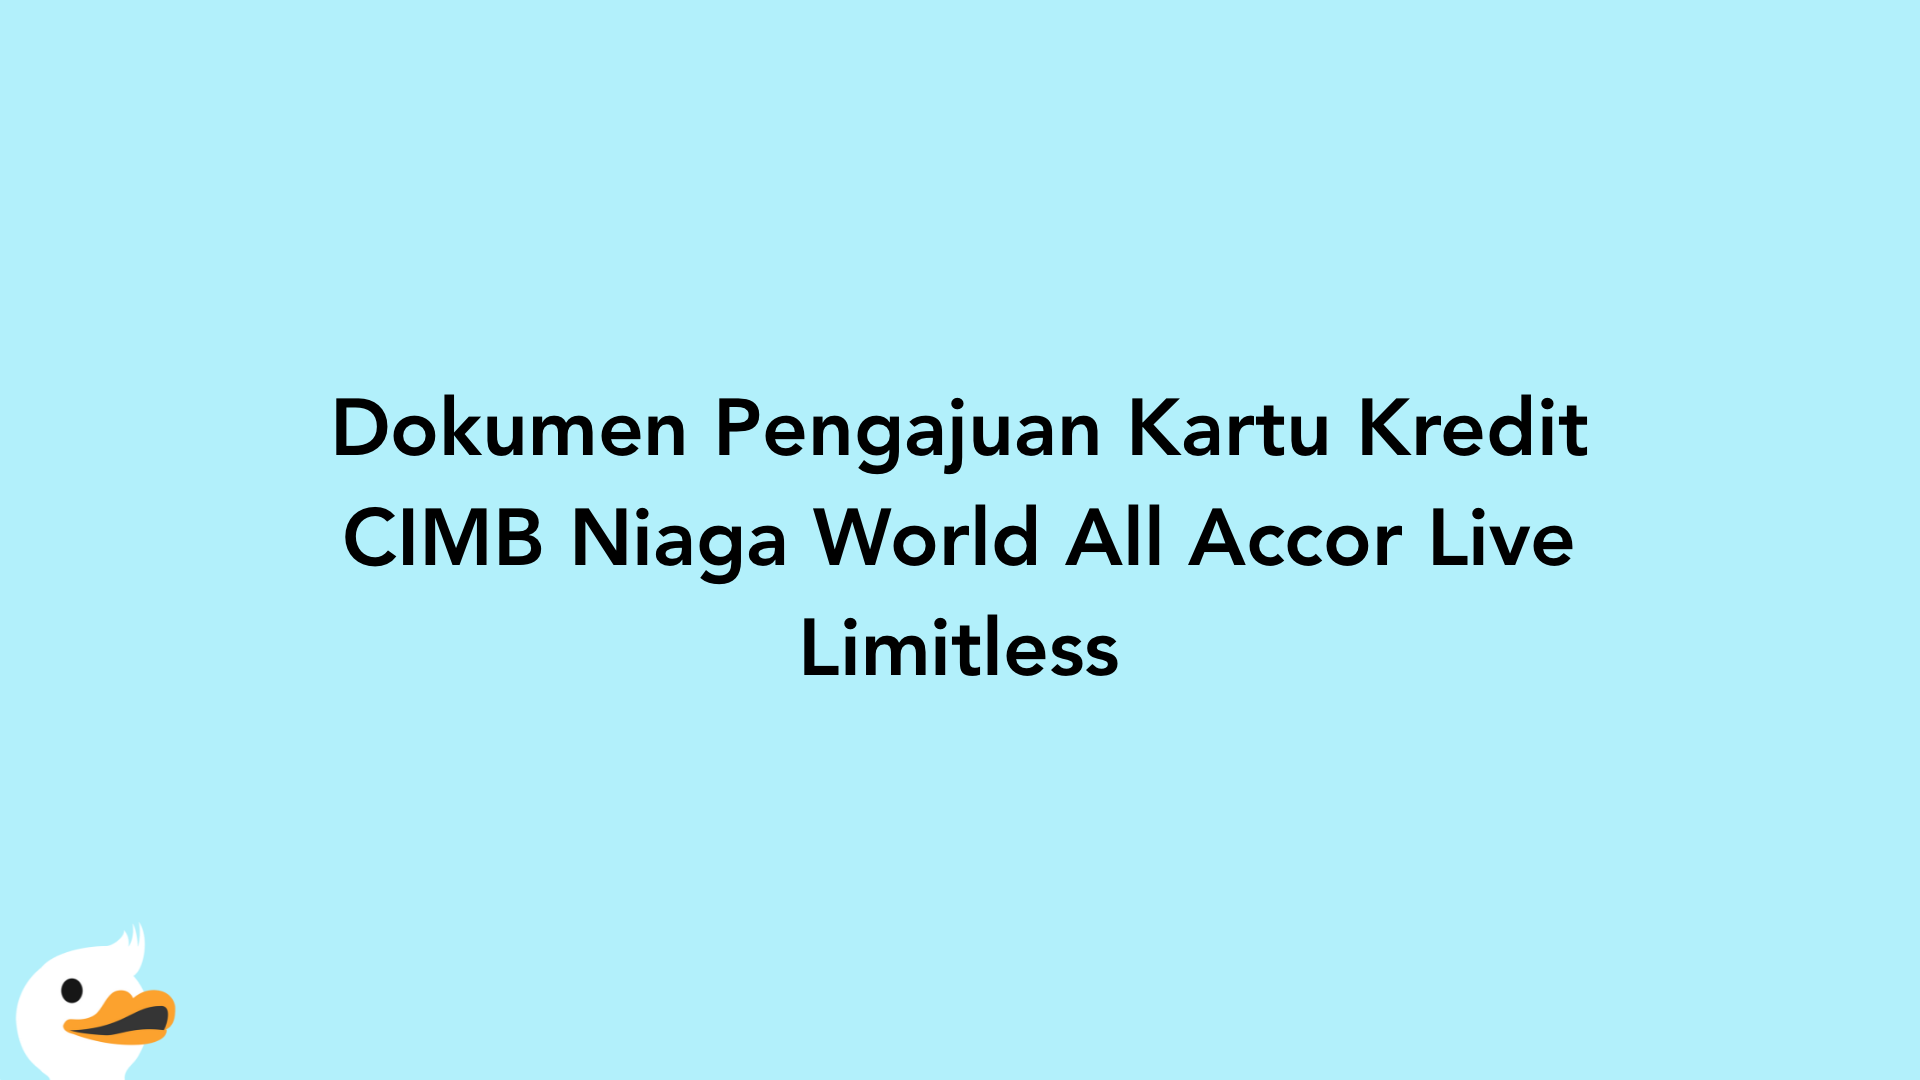 Dokumen Pengajuan Kartu Kredit CIMB Niaga World All Accor Live Limitless